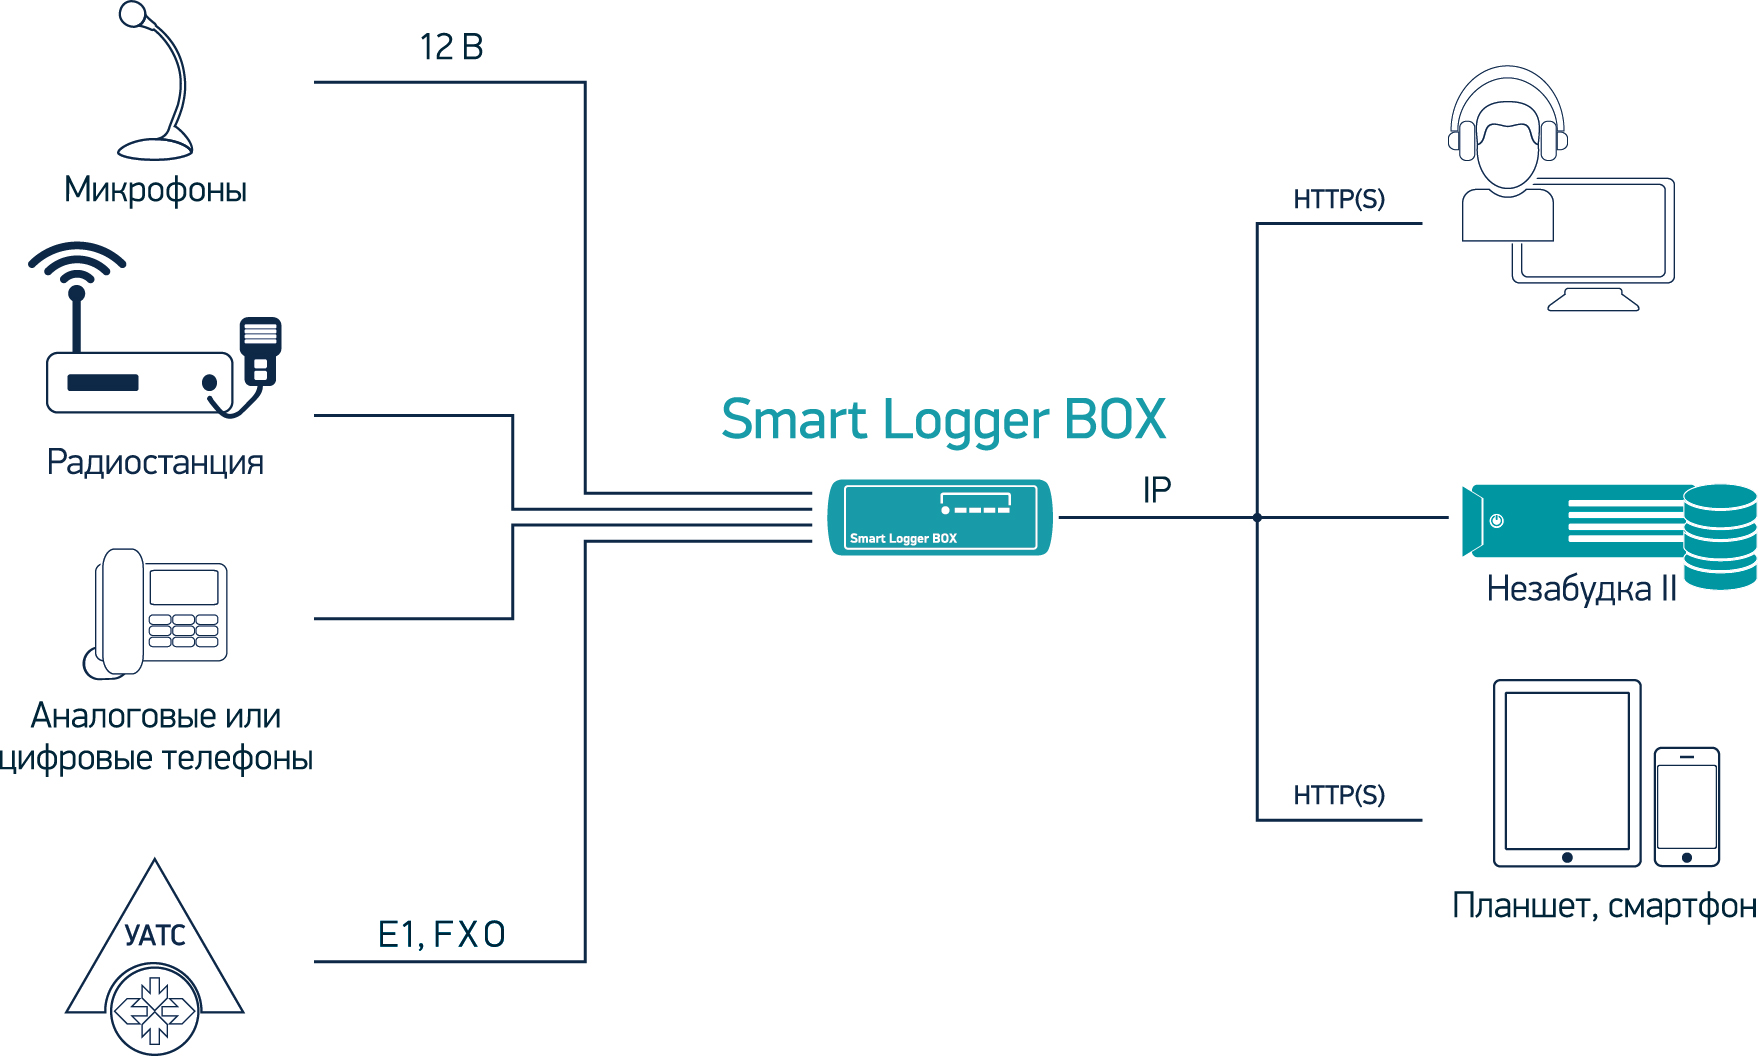 Smart Logger BOX